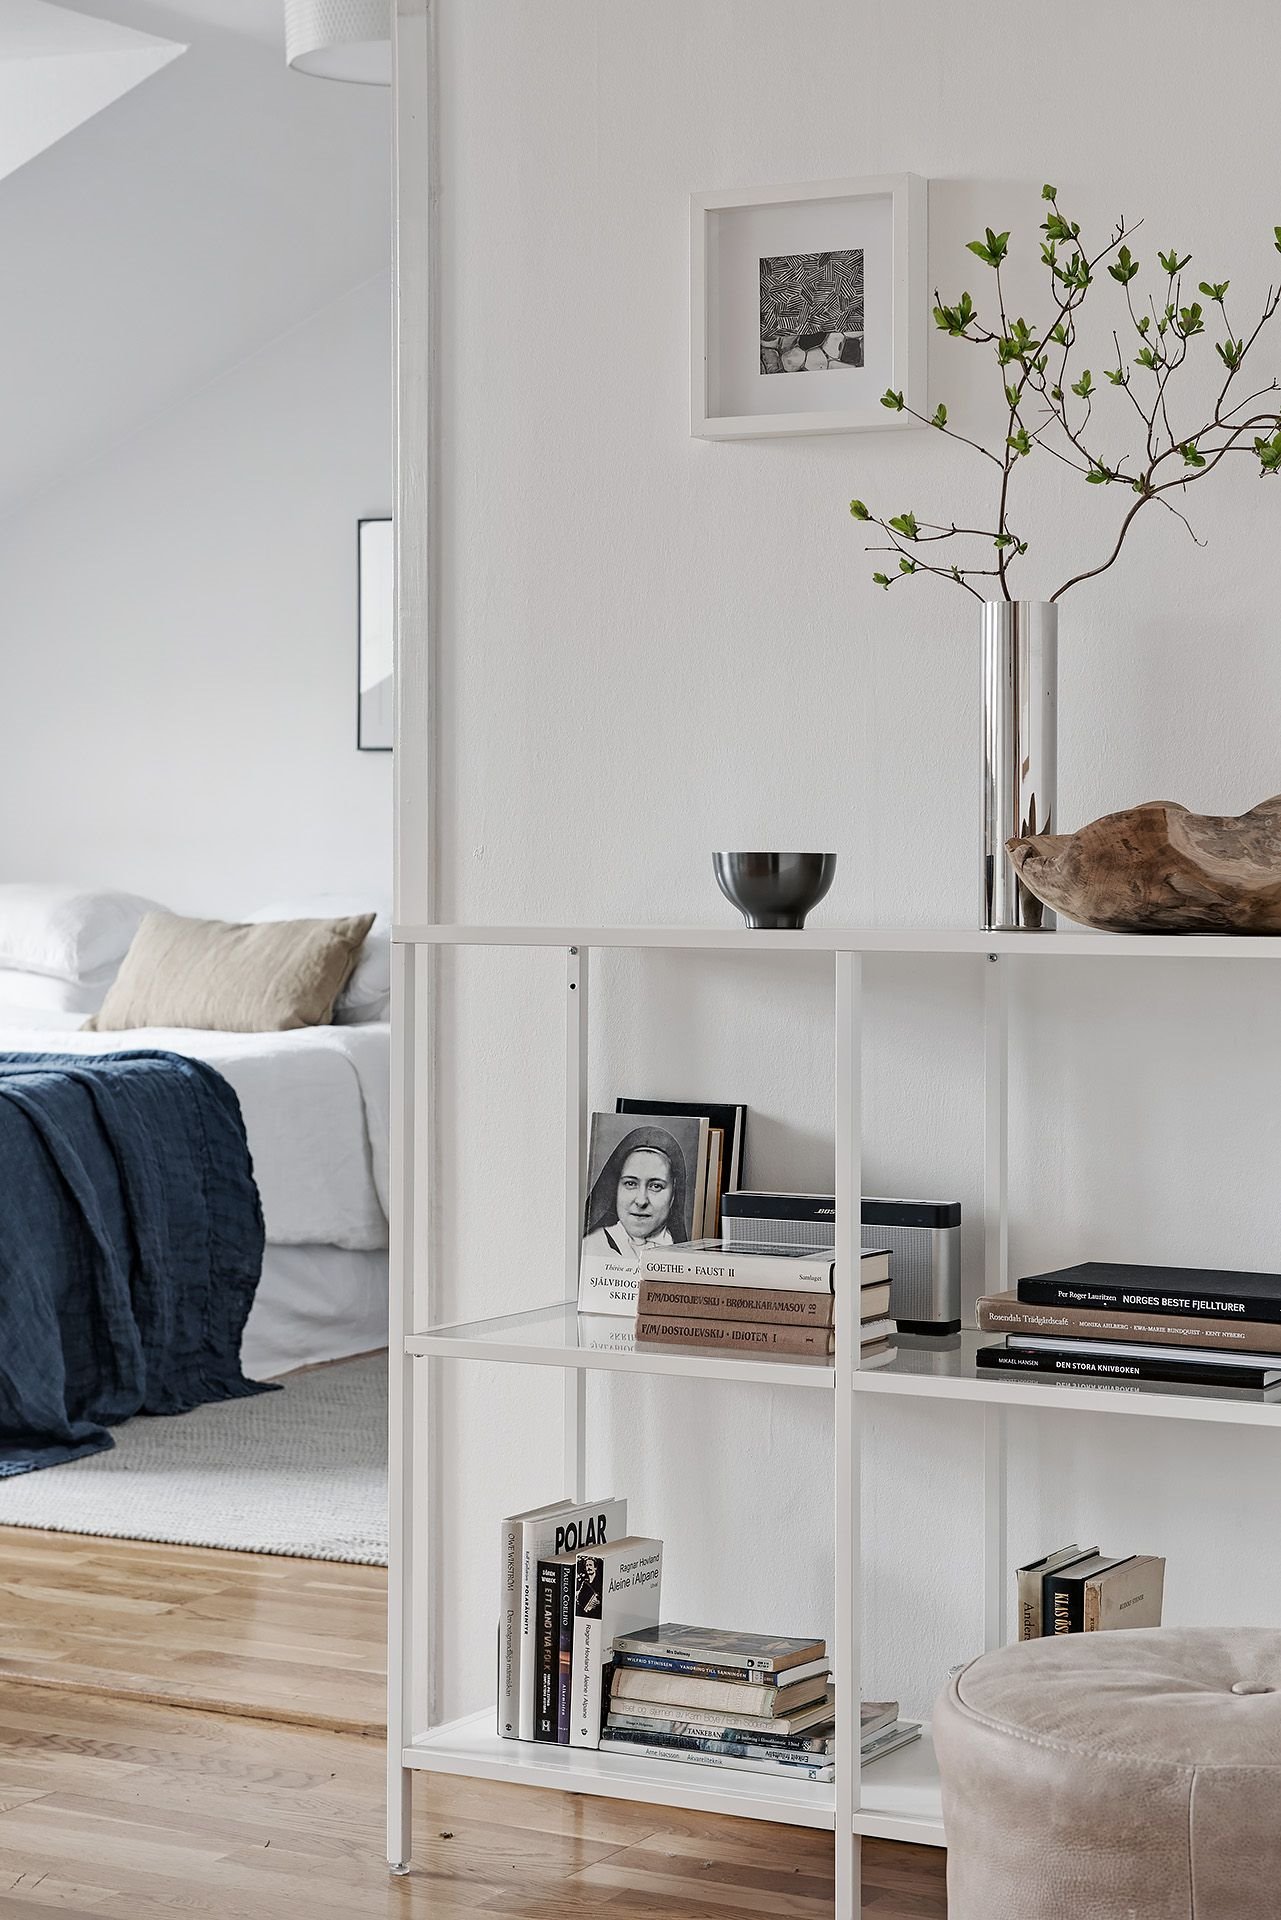 Dormitorio con estanteria modular de Ikea en color blanco. Piensa en modular